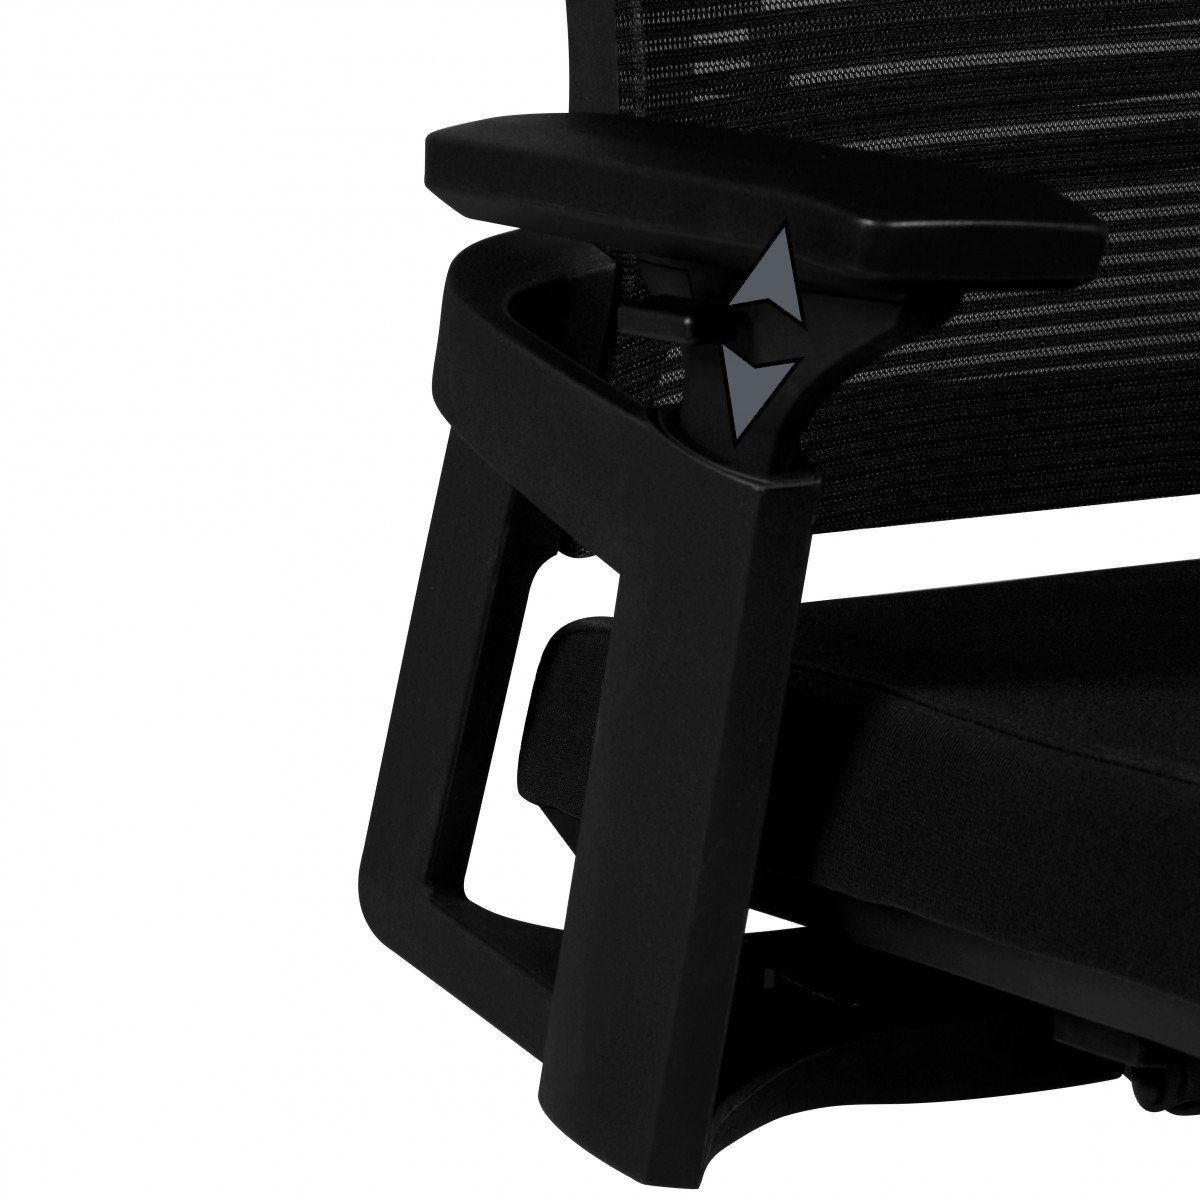 FINEBUY Kopfstütze mit Drehstuhl Schreibtischstuhl (Stoffbezug mit Armlehne), Schreibtischstuhl Schwarz, Bürostuhl 120 FB41705 Modern kg,